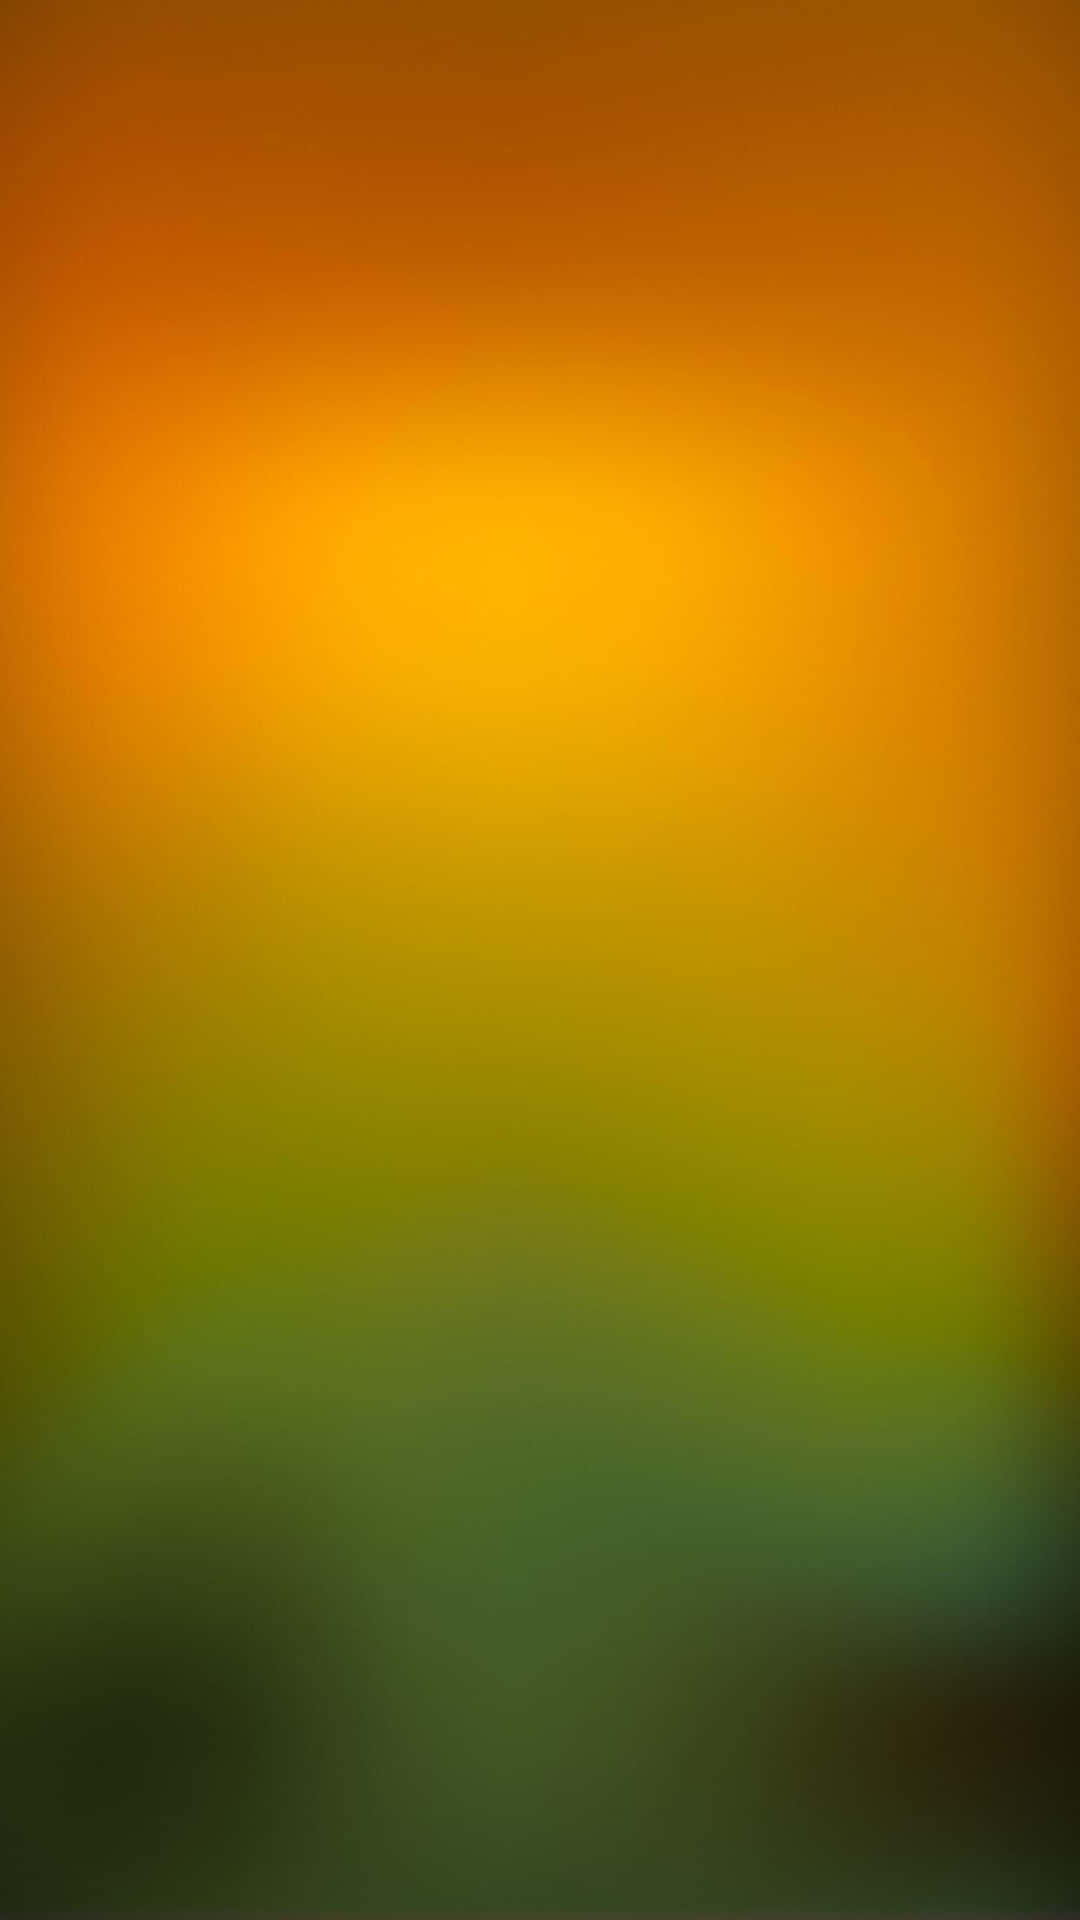 Orange And Green Background